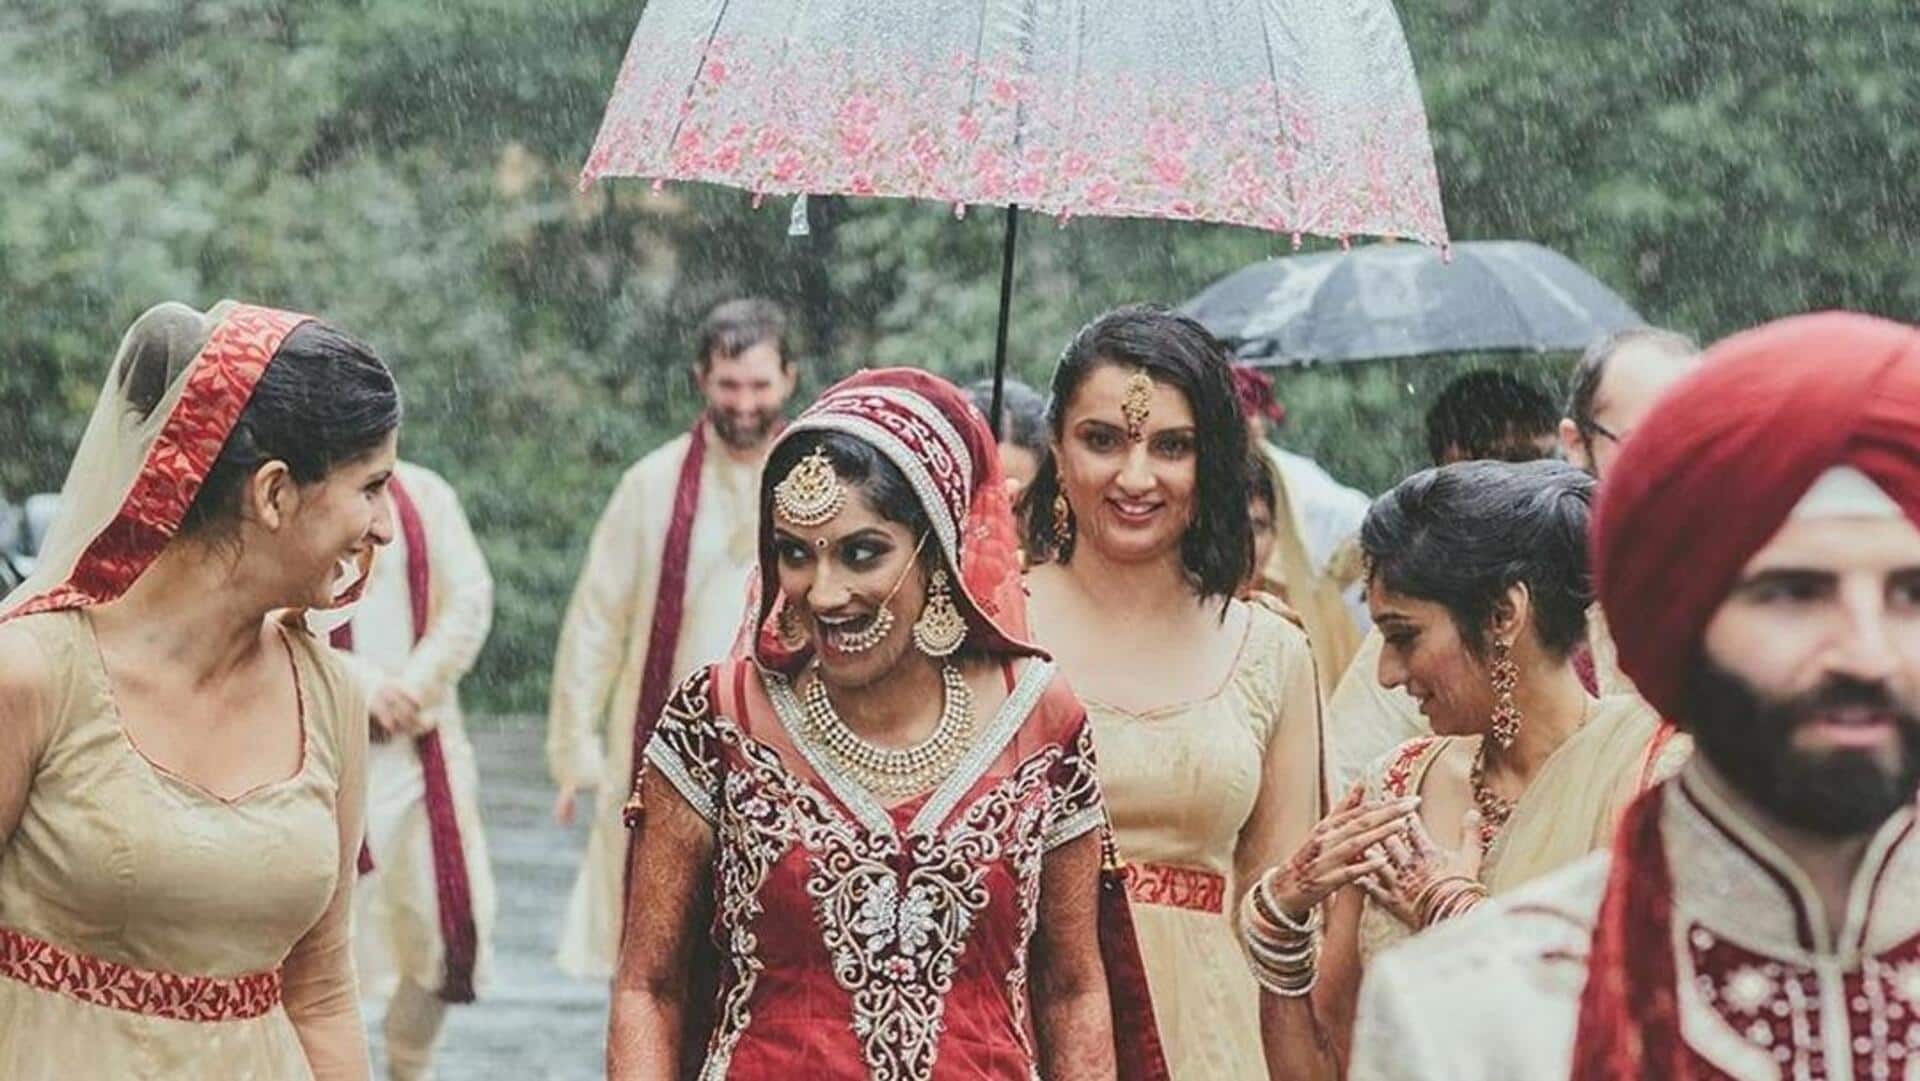 Monsoon wedding attire essentials for a rain-proof celebration